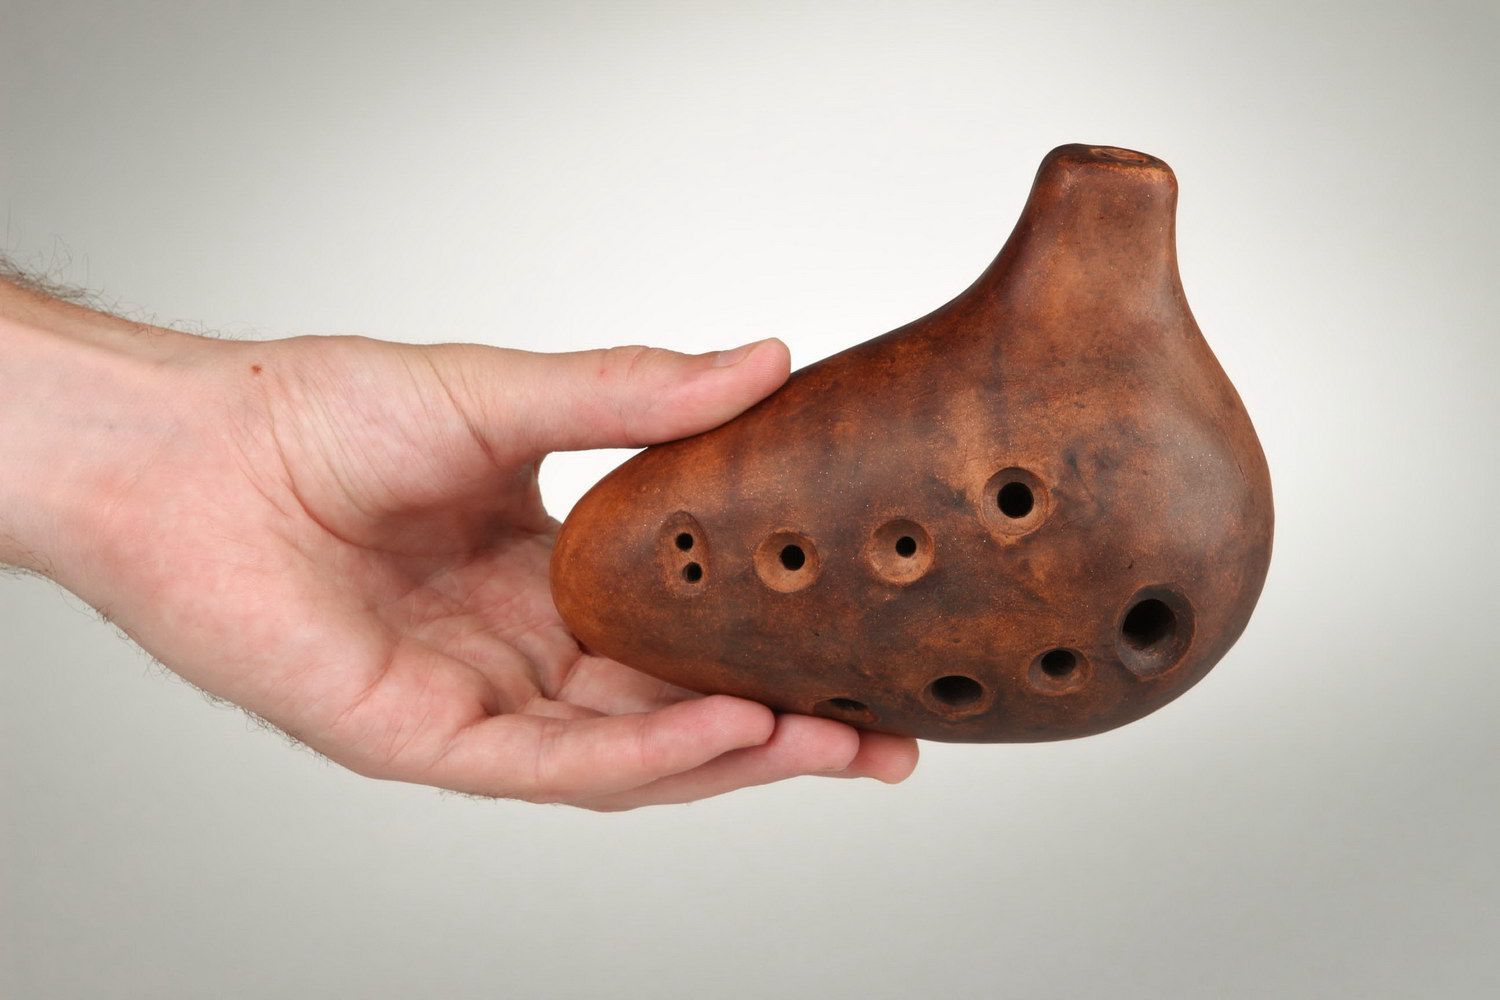 Ceramic ocarina, globular flute with 8 holes photo 3